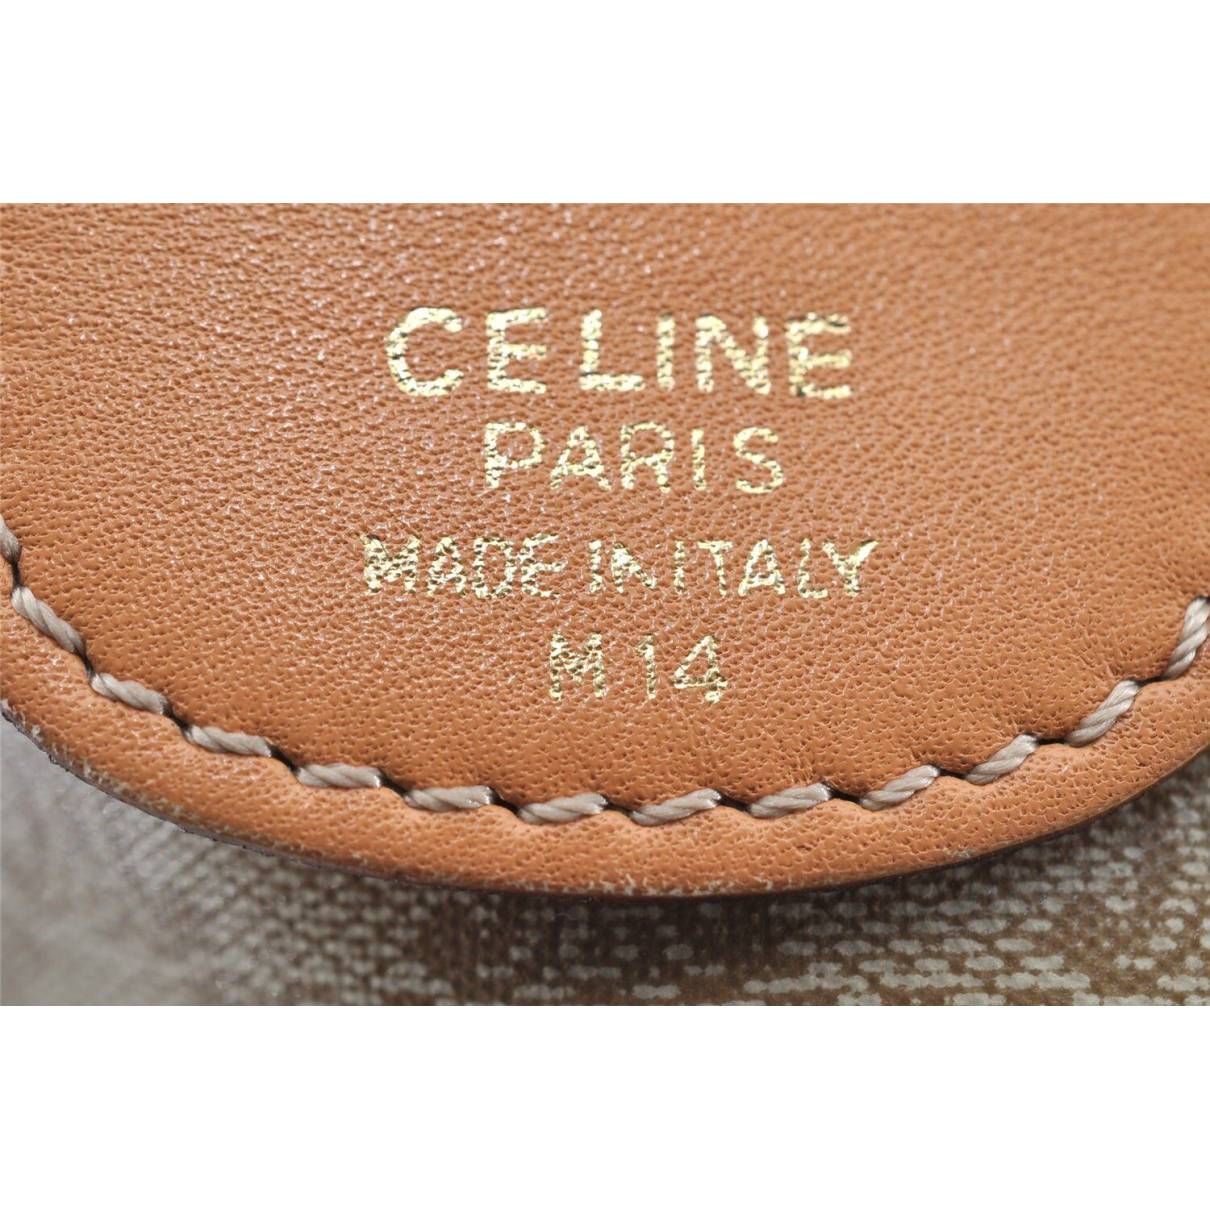 Buy Celine Handbag online